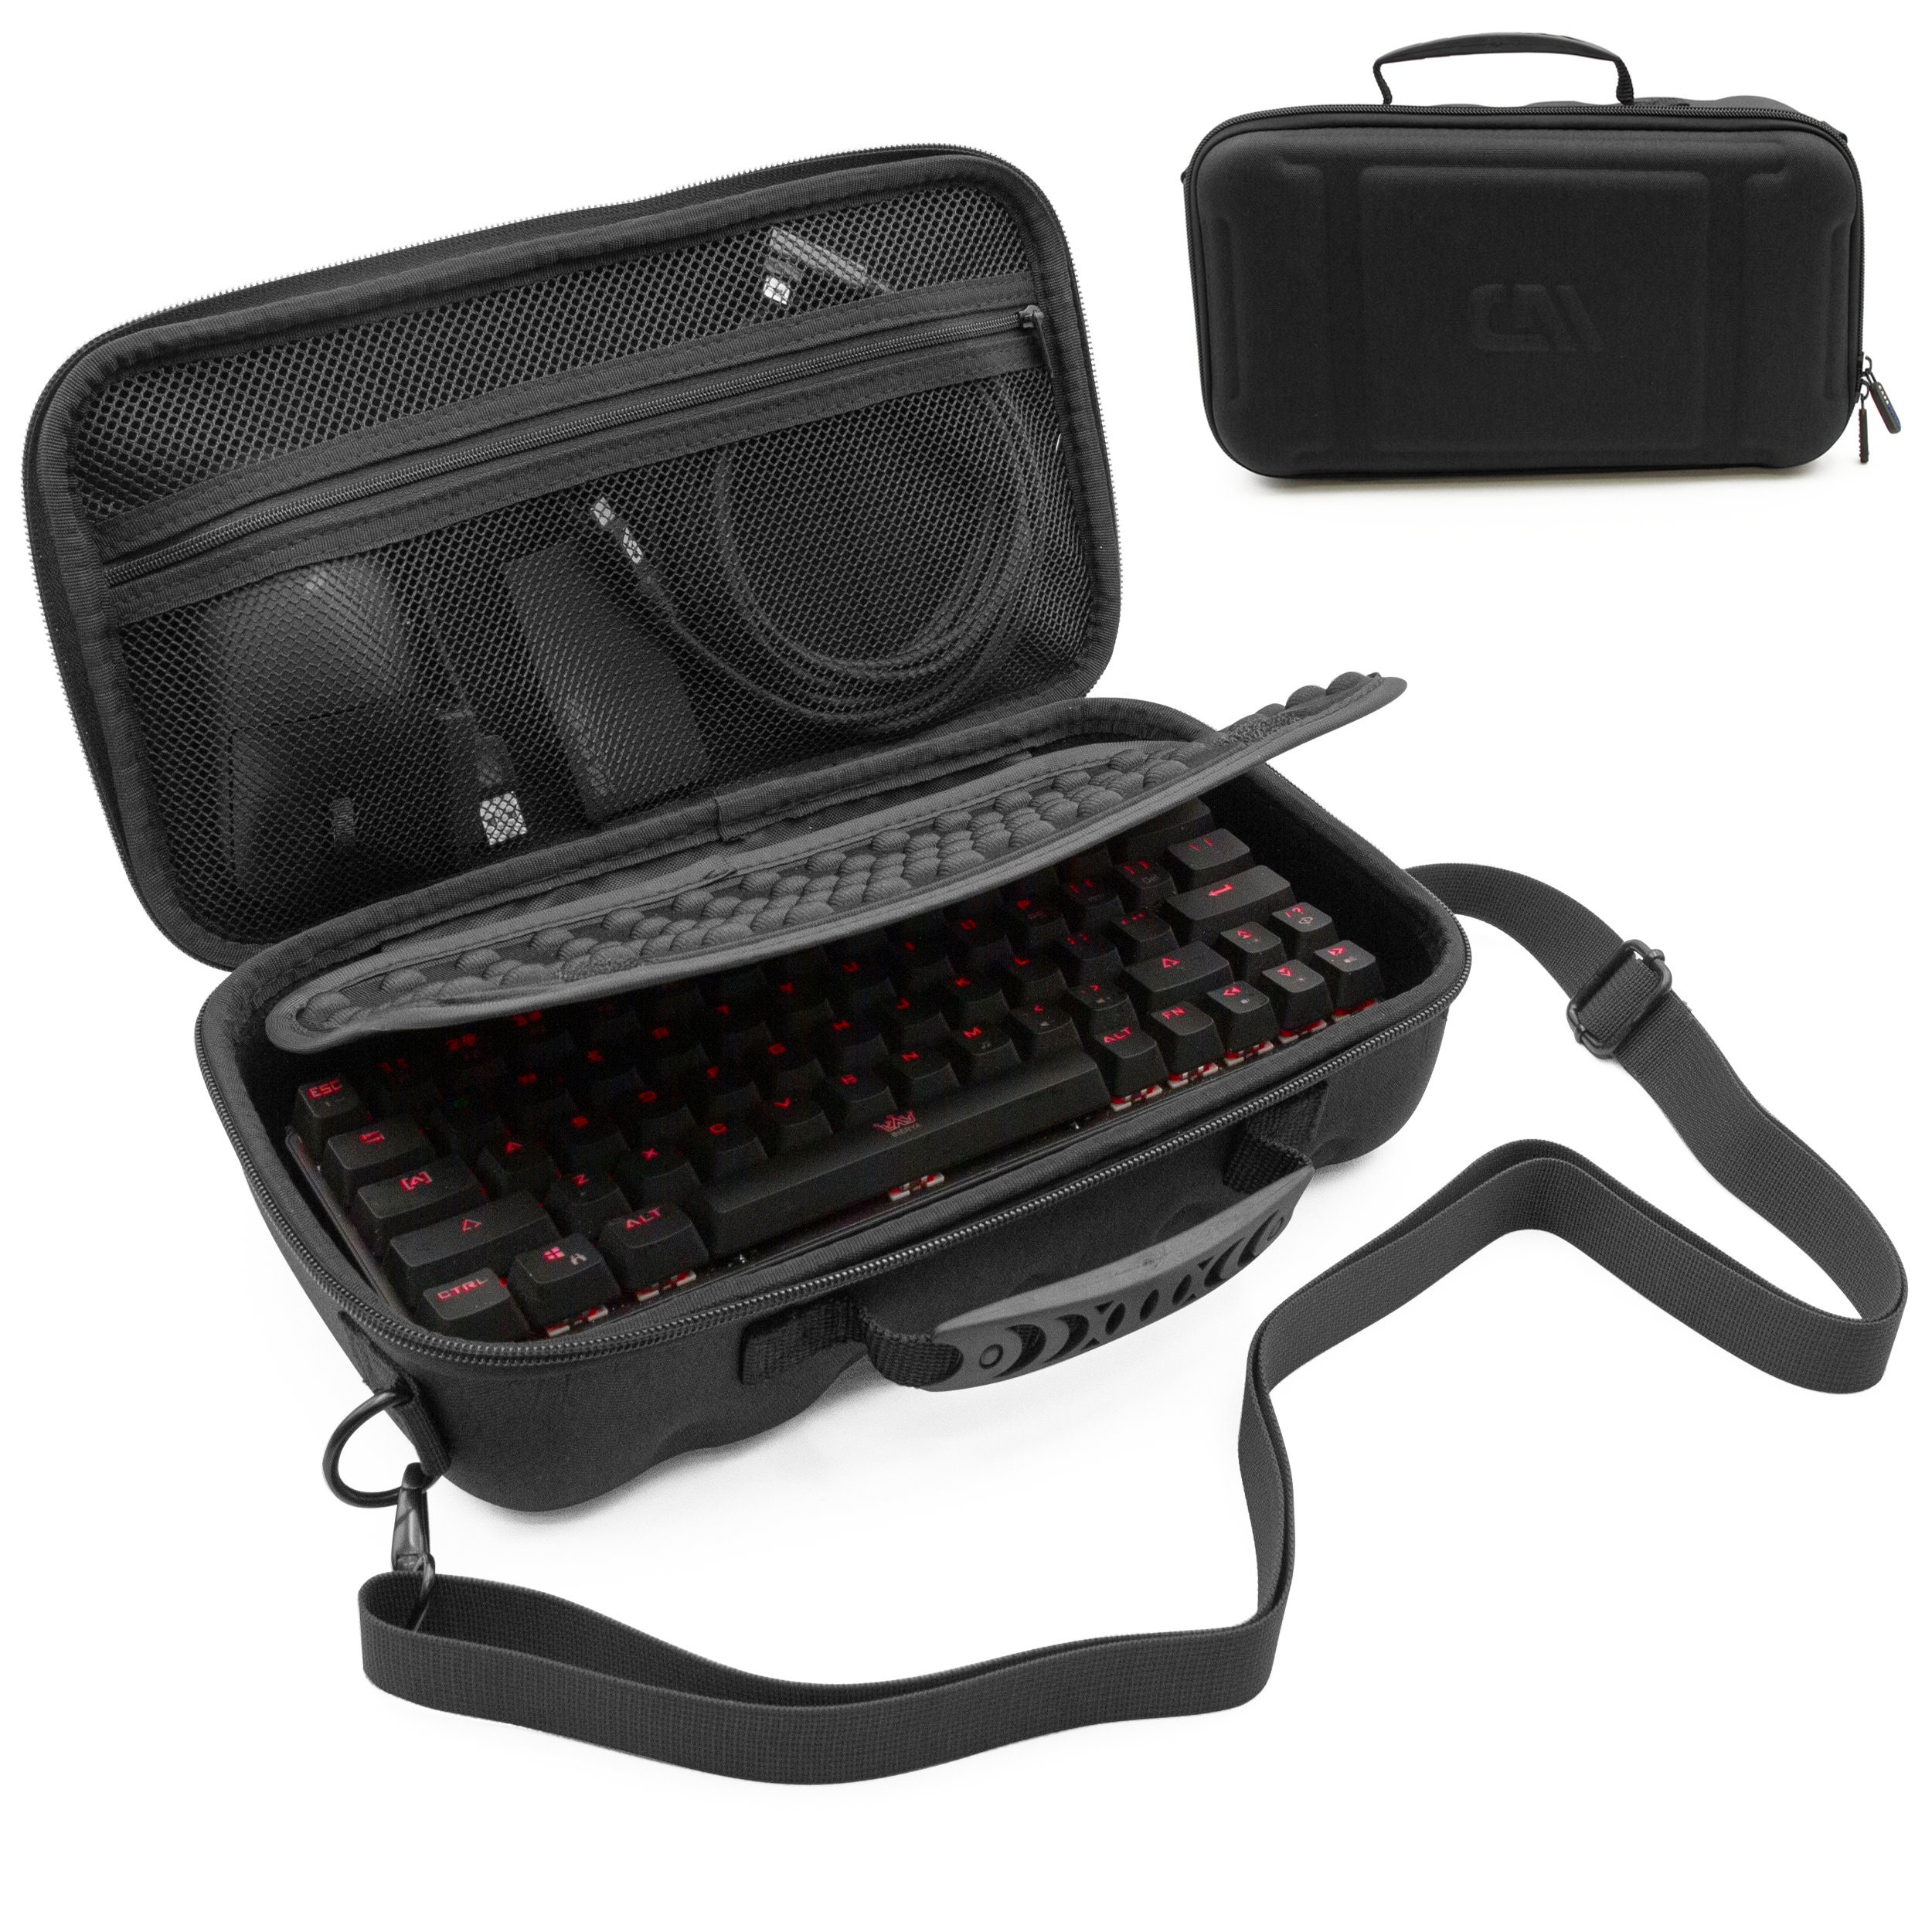 Free Gift] Razer Huntsman Mini 60% Wired Gaming Keyboard